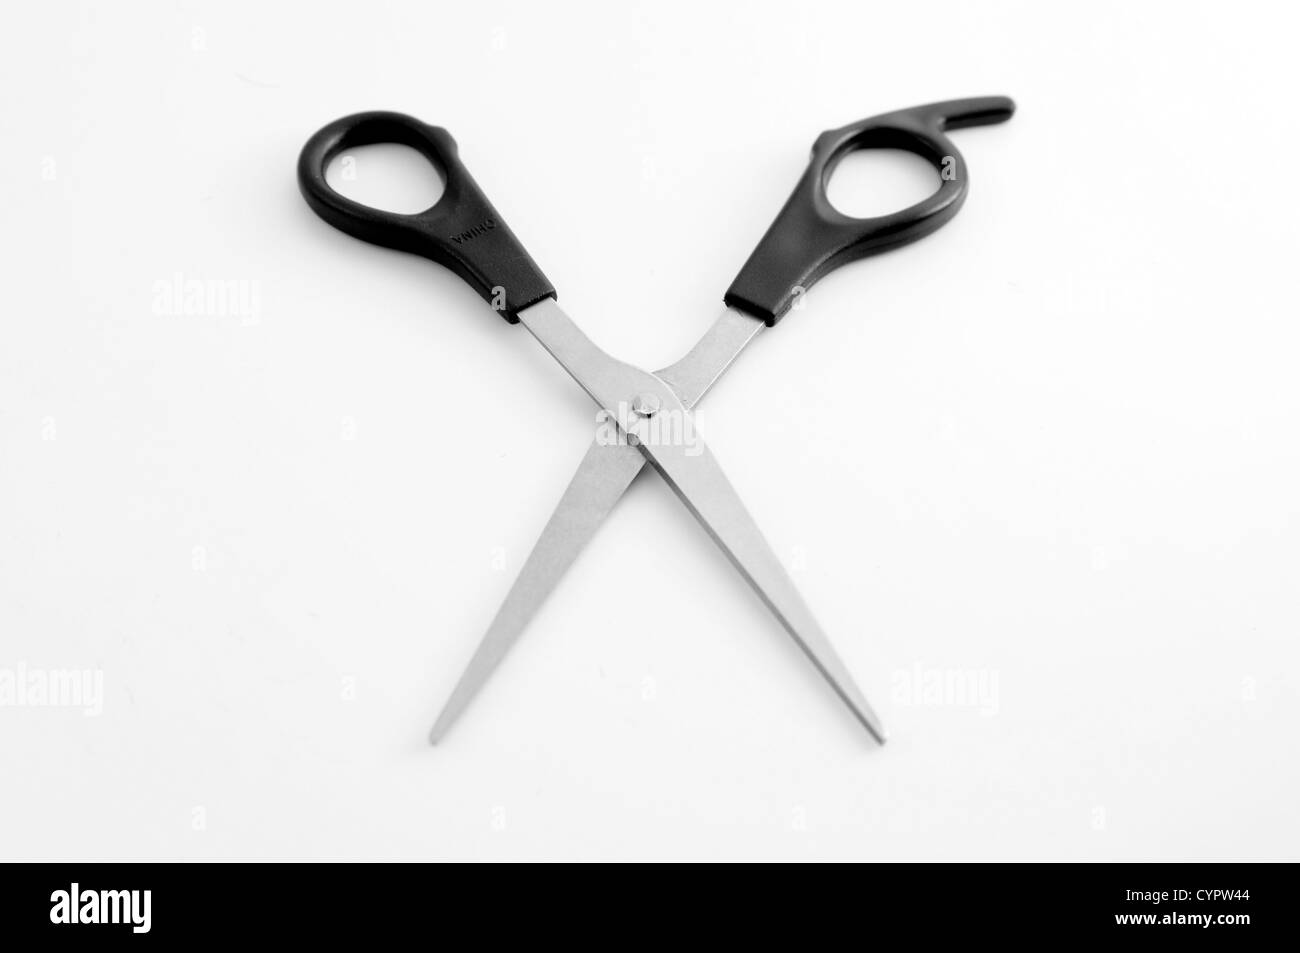 Isolated Hairdressers scissors Stock Photo